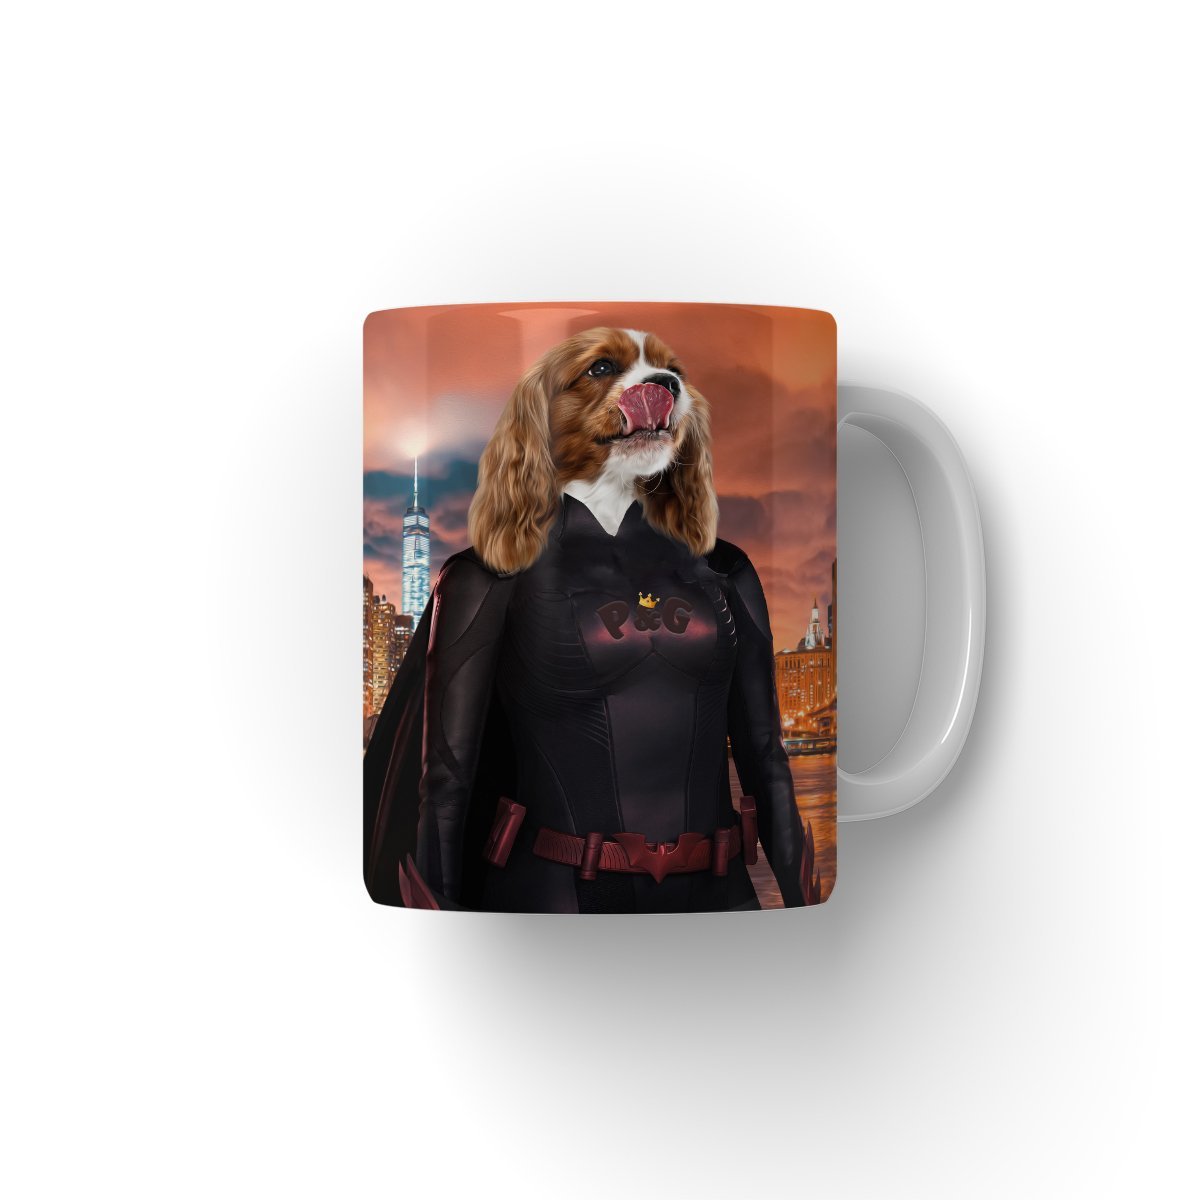 Batwoman: Custom Pet Mug - Paw & Glory - #pet portraits# - #dog portraits# - #pet portraits uk#paw & glory, pet portraits Mug,mug for gift, make custom mug, print designs on mugs, custom designed mugs, gift mug with photo